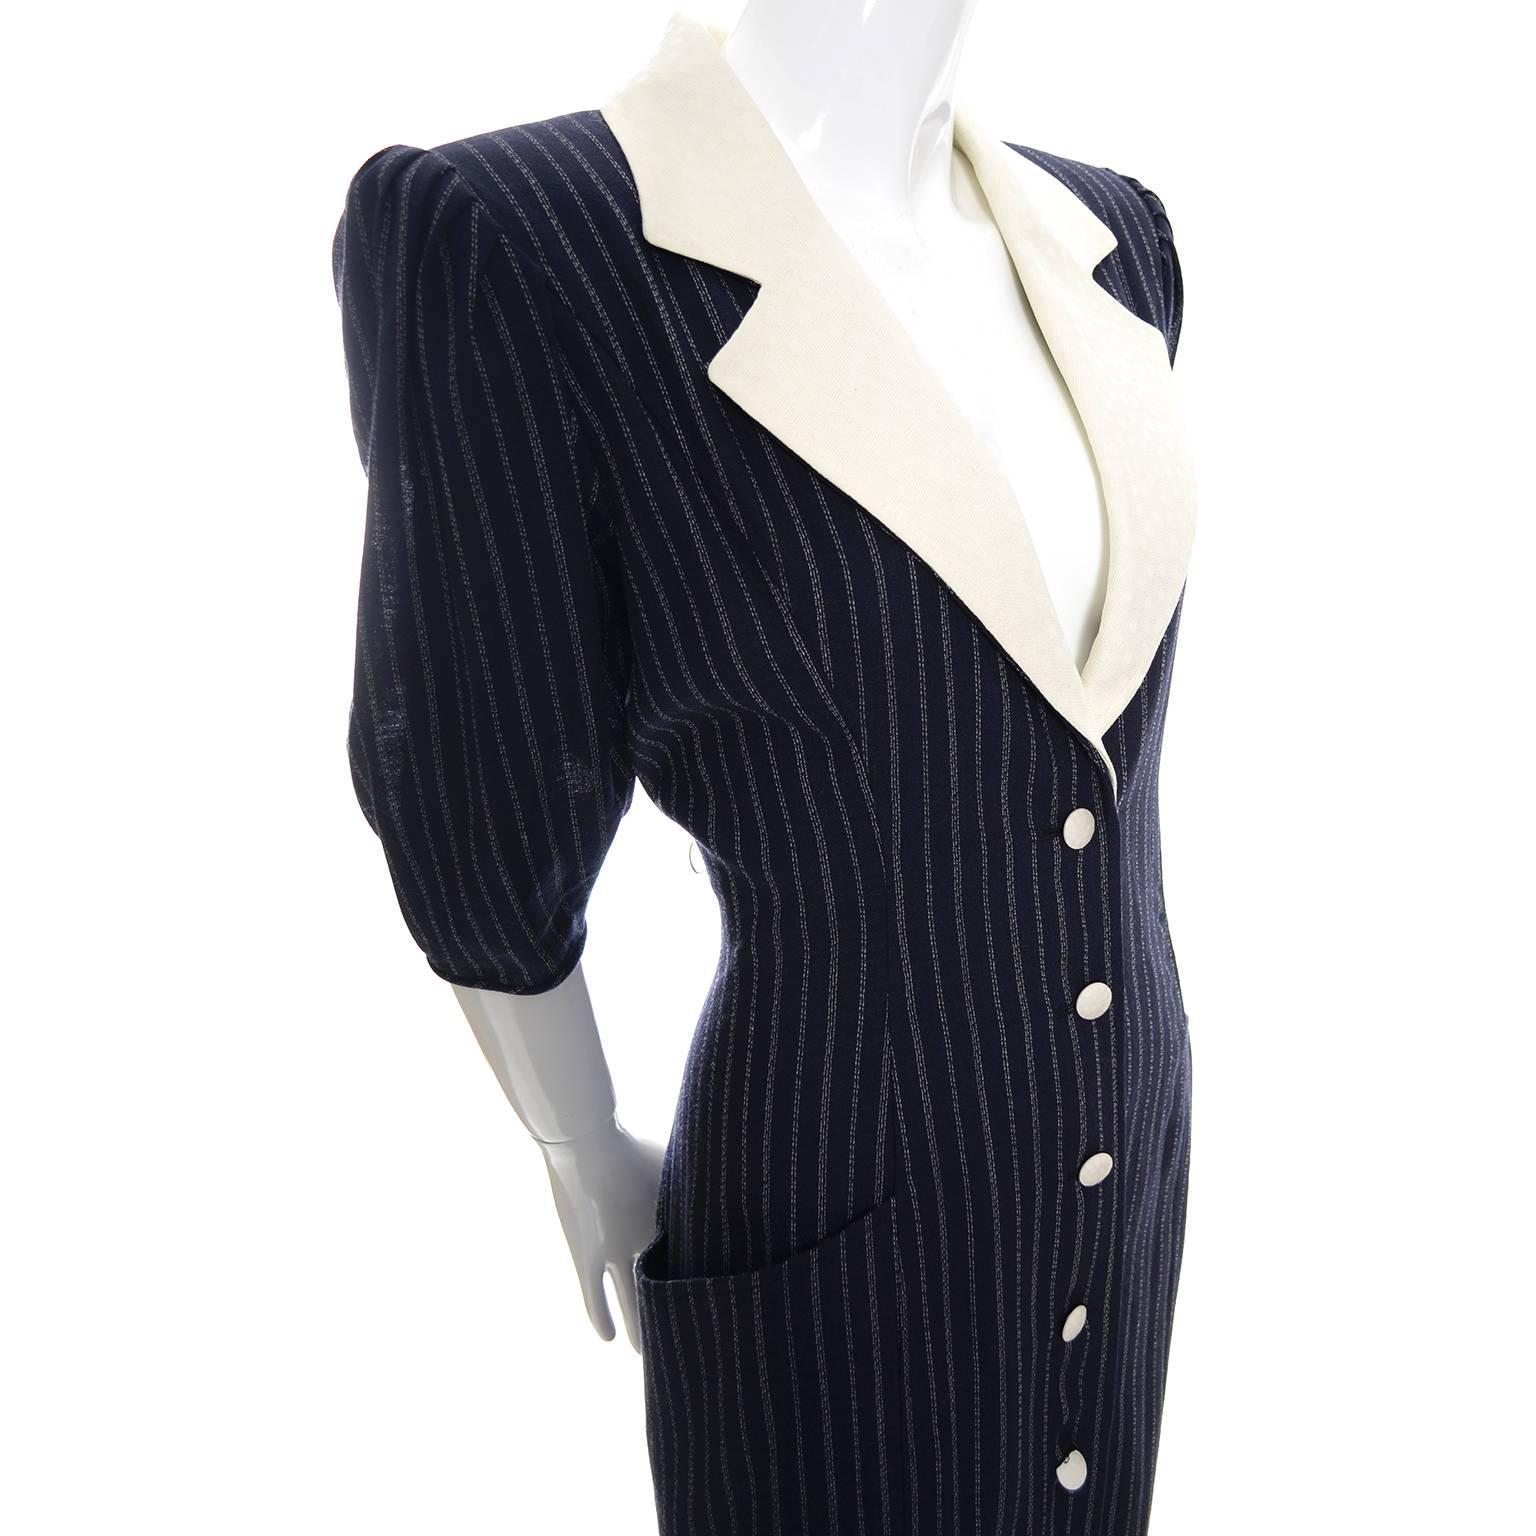 Women's Emanuel Ungaro Parallele Vintage Dress in Navy Blue & White Wool Crepe 